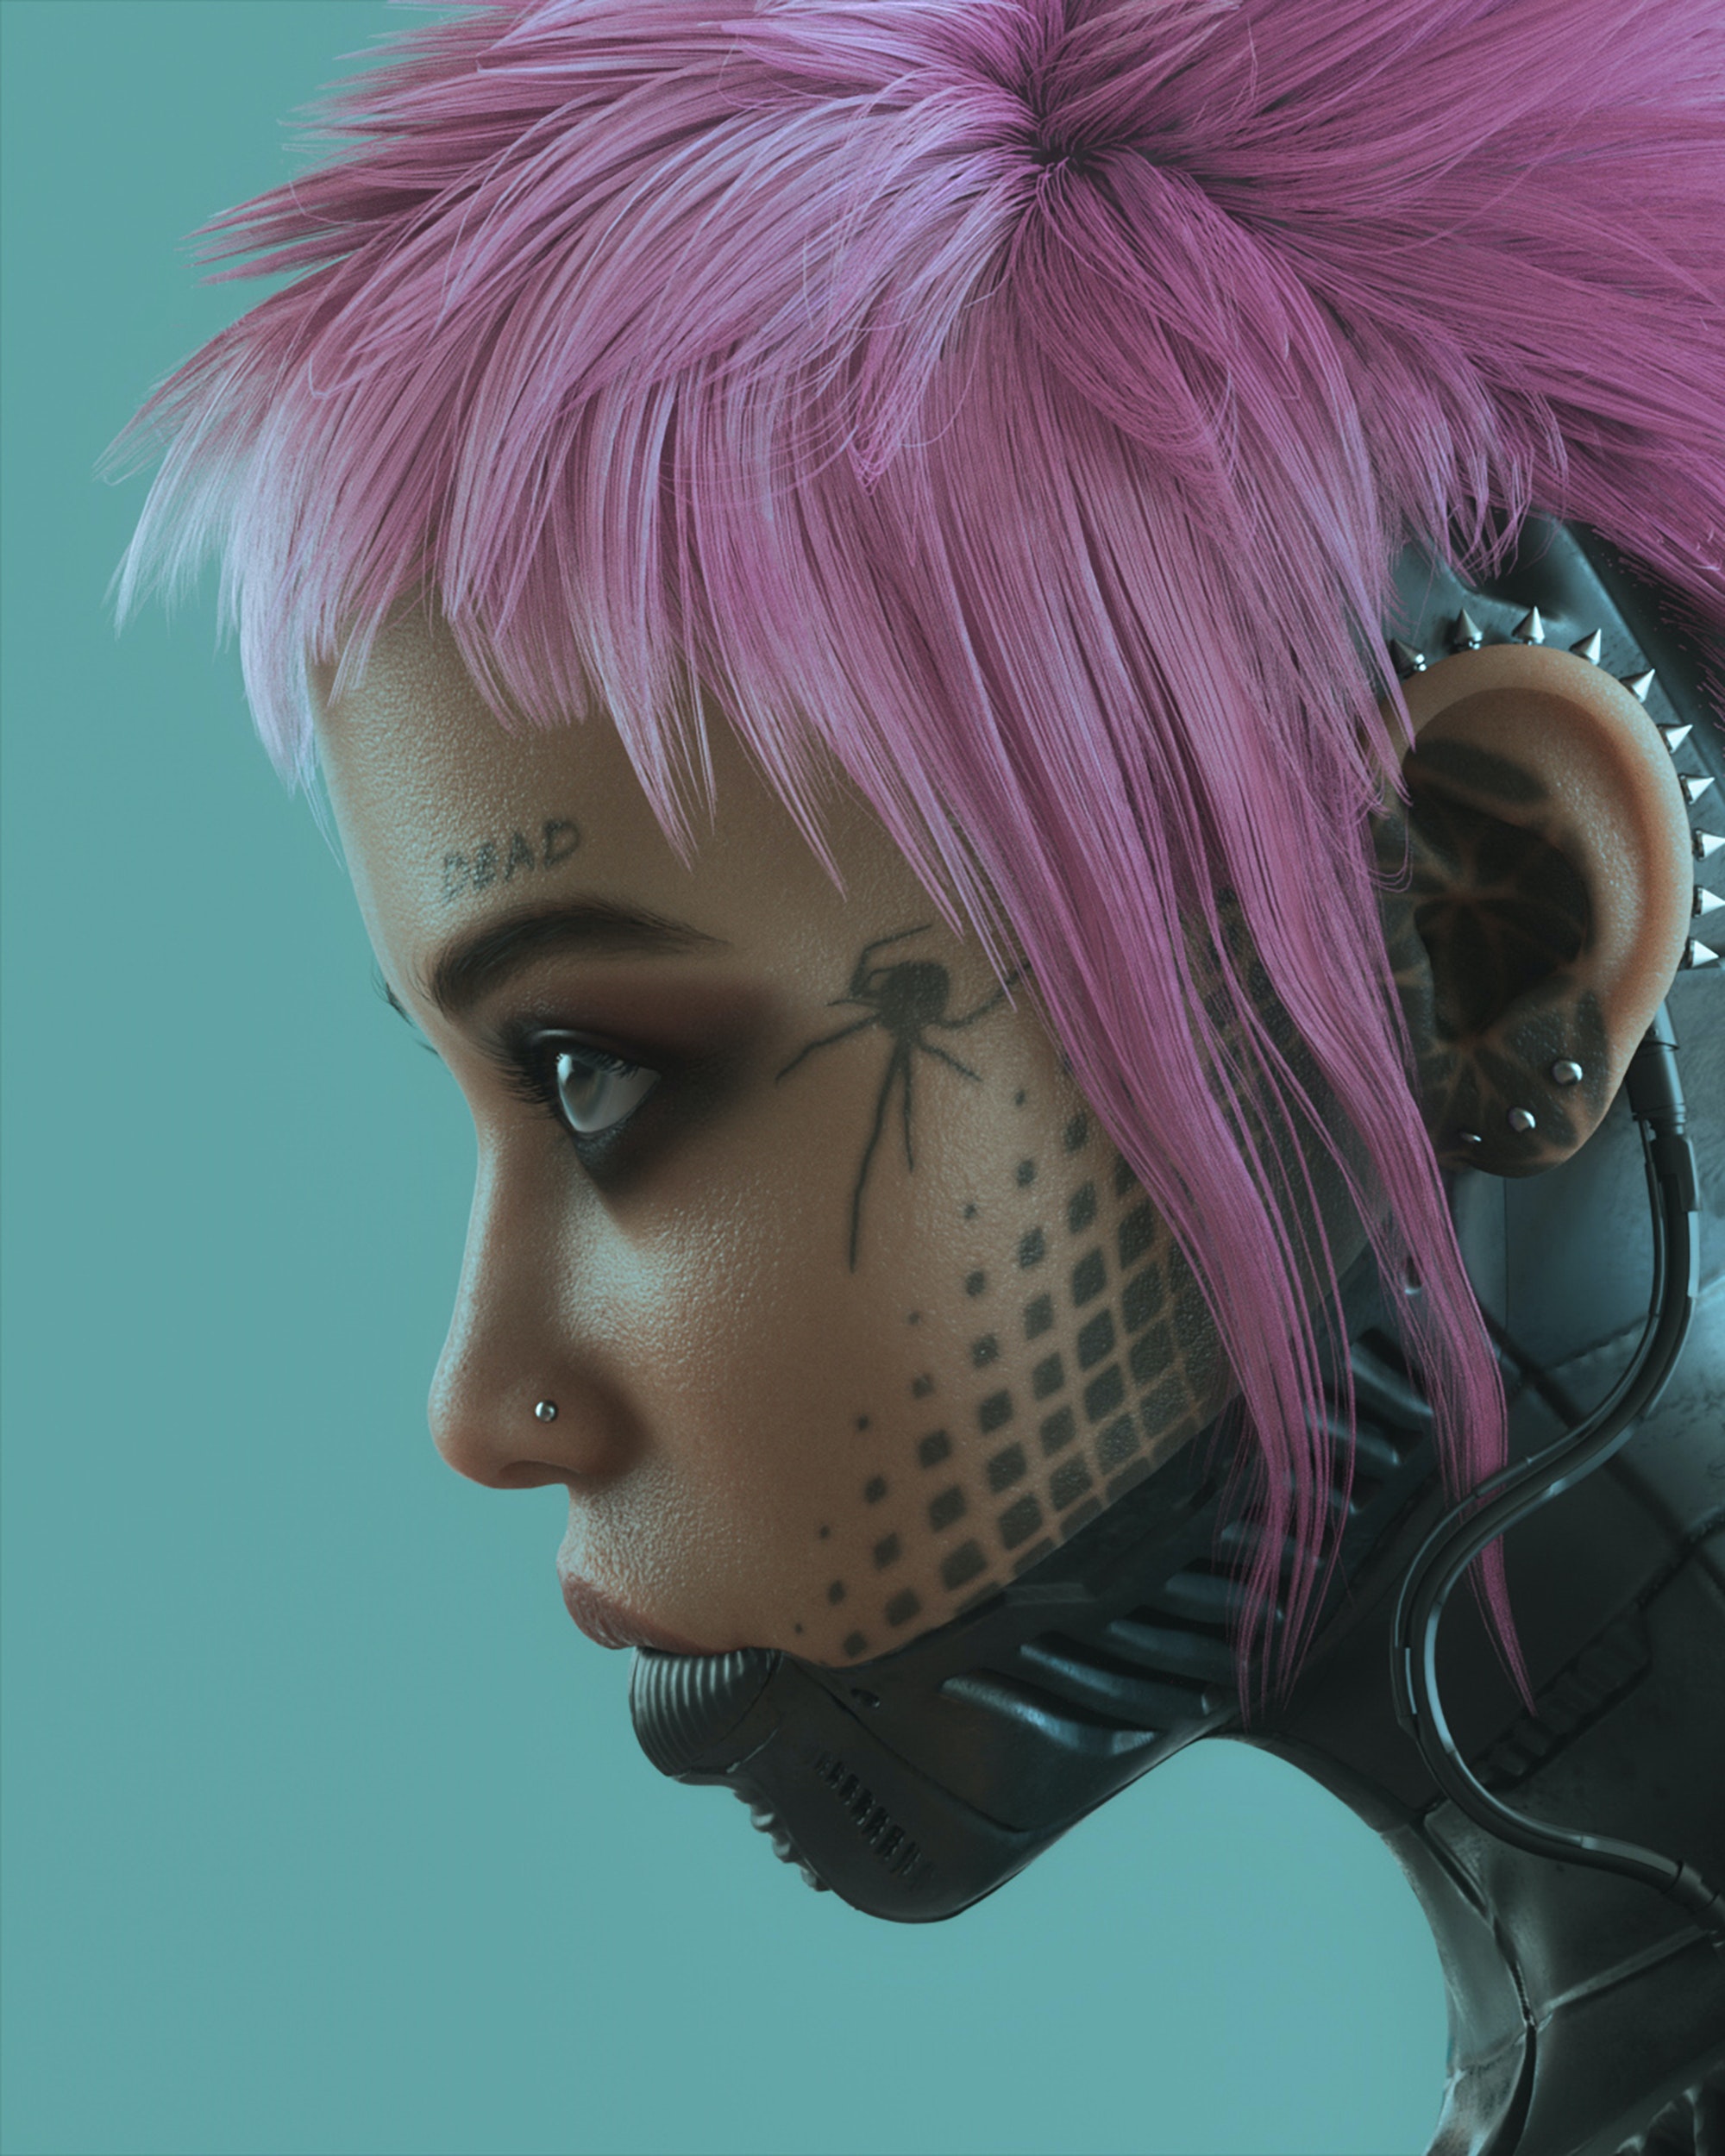 General 2000x2500 digital art artwork illustration women portrait cyberpunk Asian piercing pink hair short hair One Speg tattoo